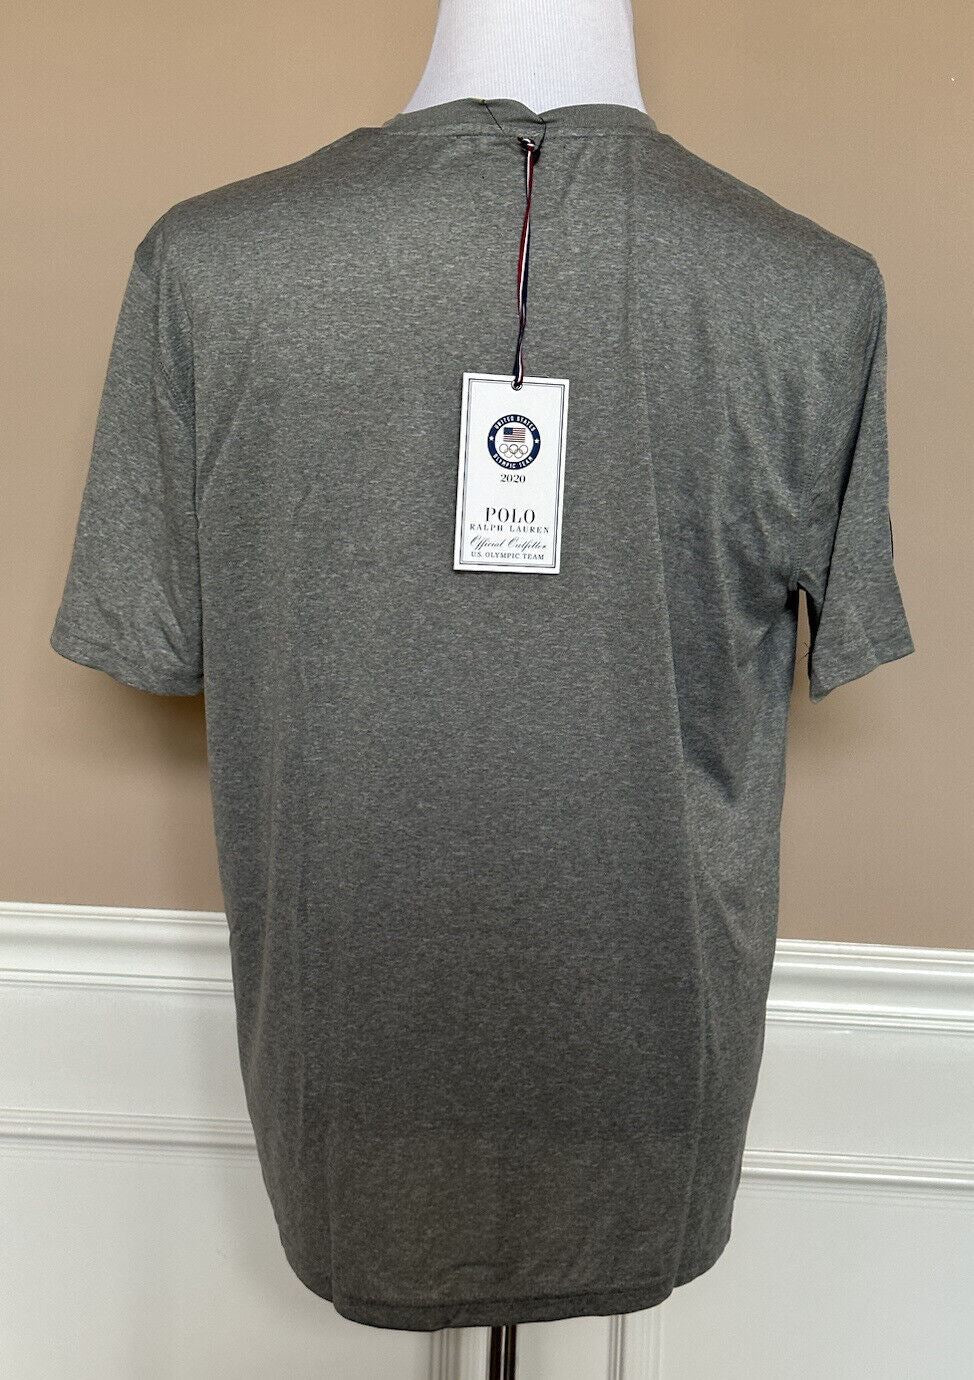 Neu mit Etikett: 59,50 $ Polo Ralph Lauren USA Team Kurzarm-Stretch-T-Shirt Grau L 